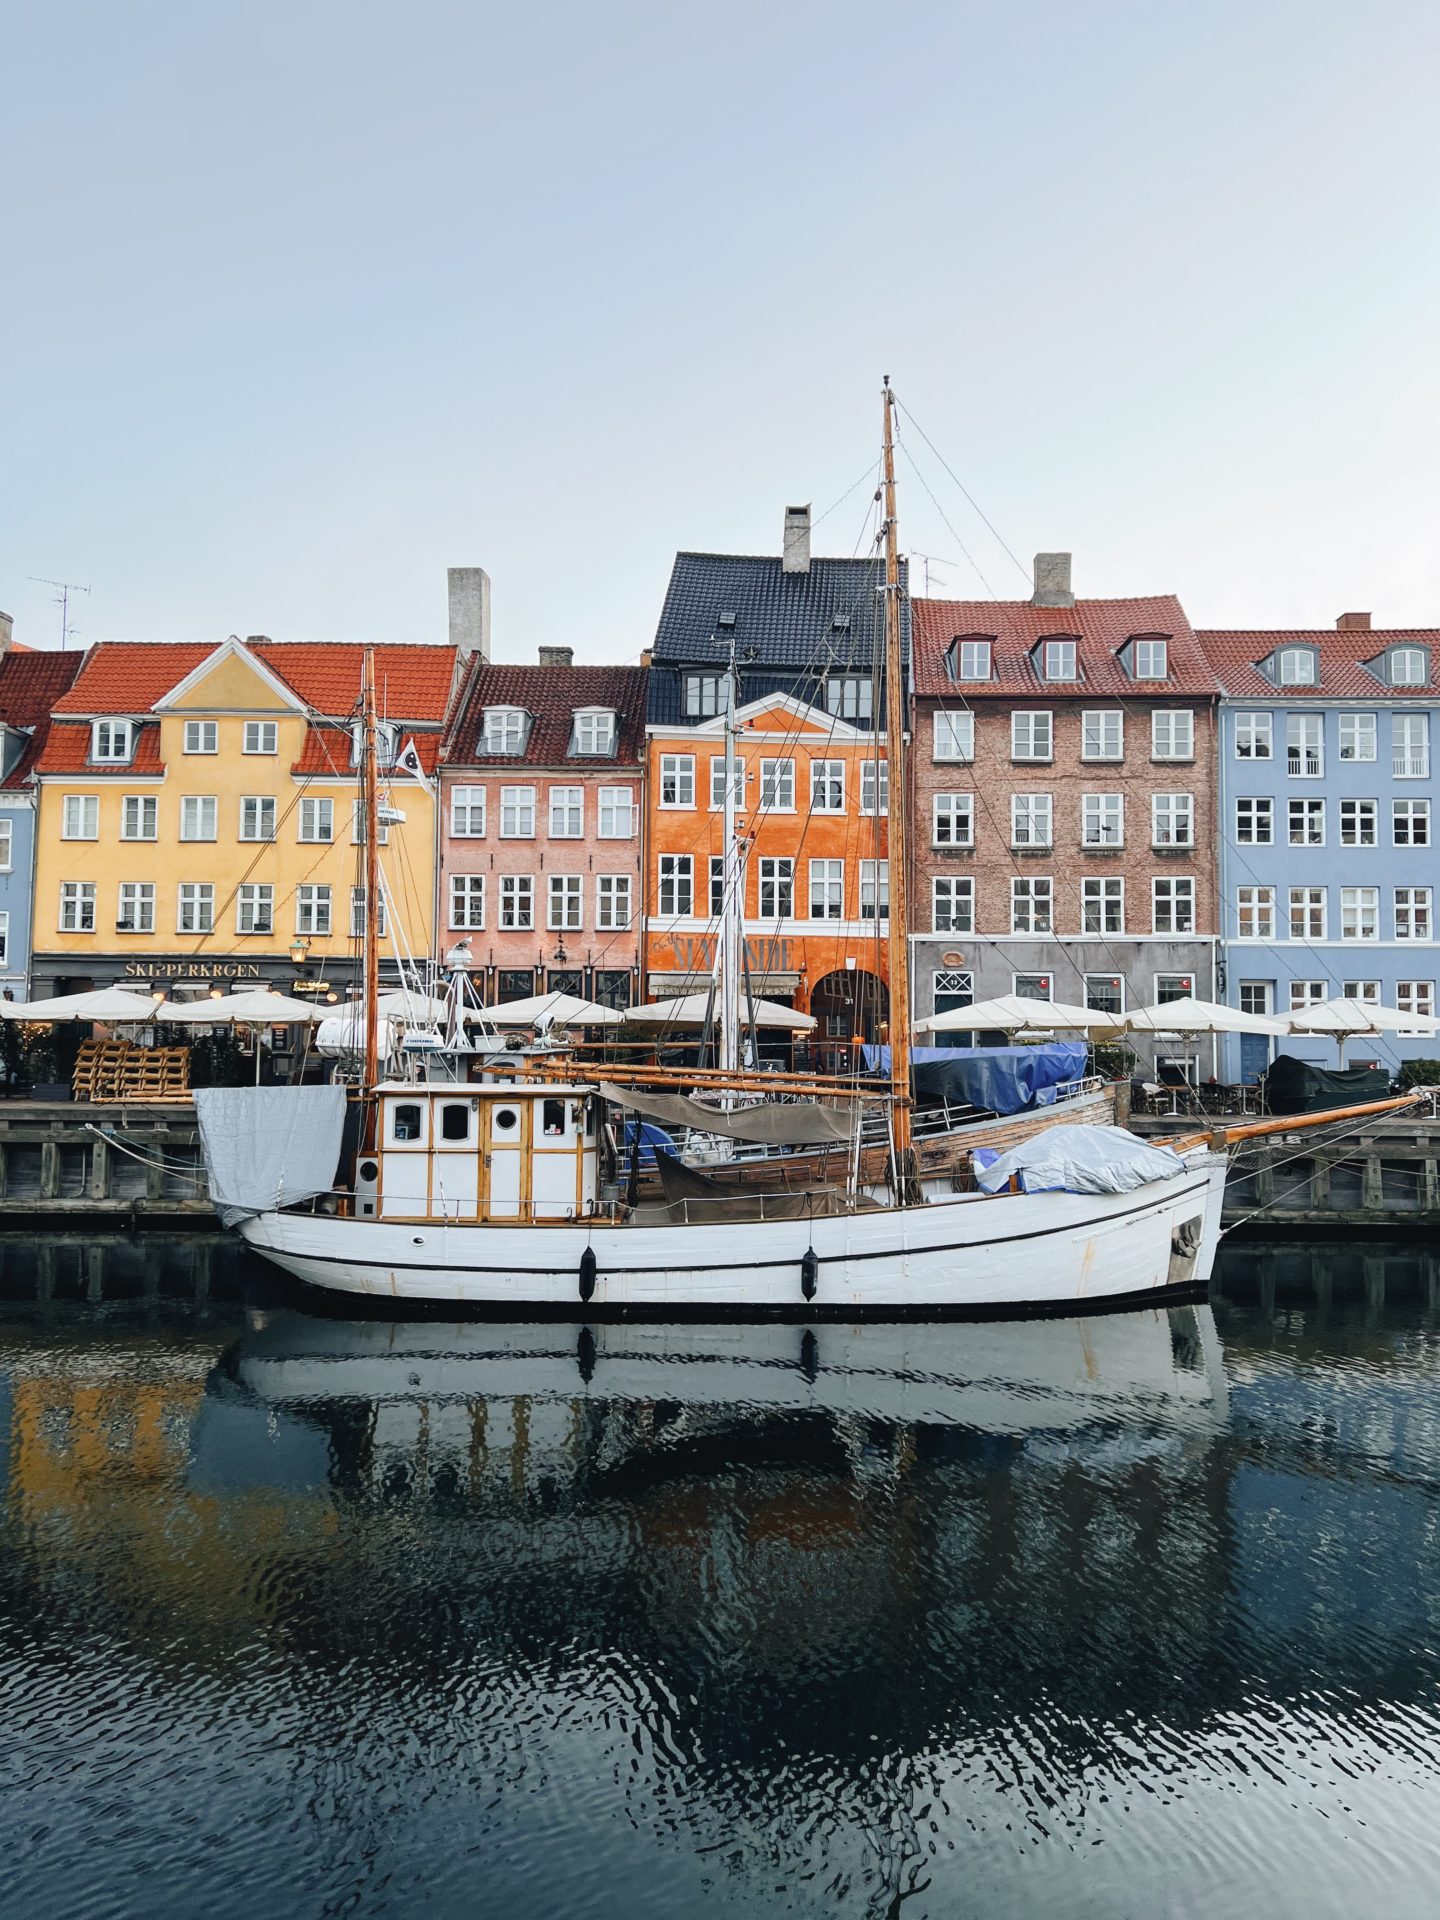 The Best Things to do in Copenhagen by World of Wanderlust